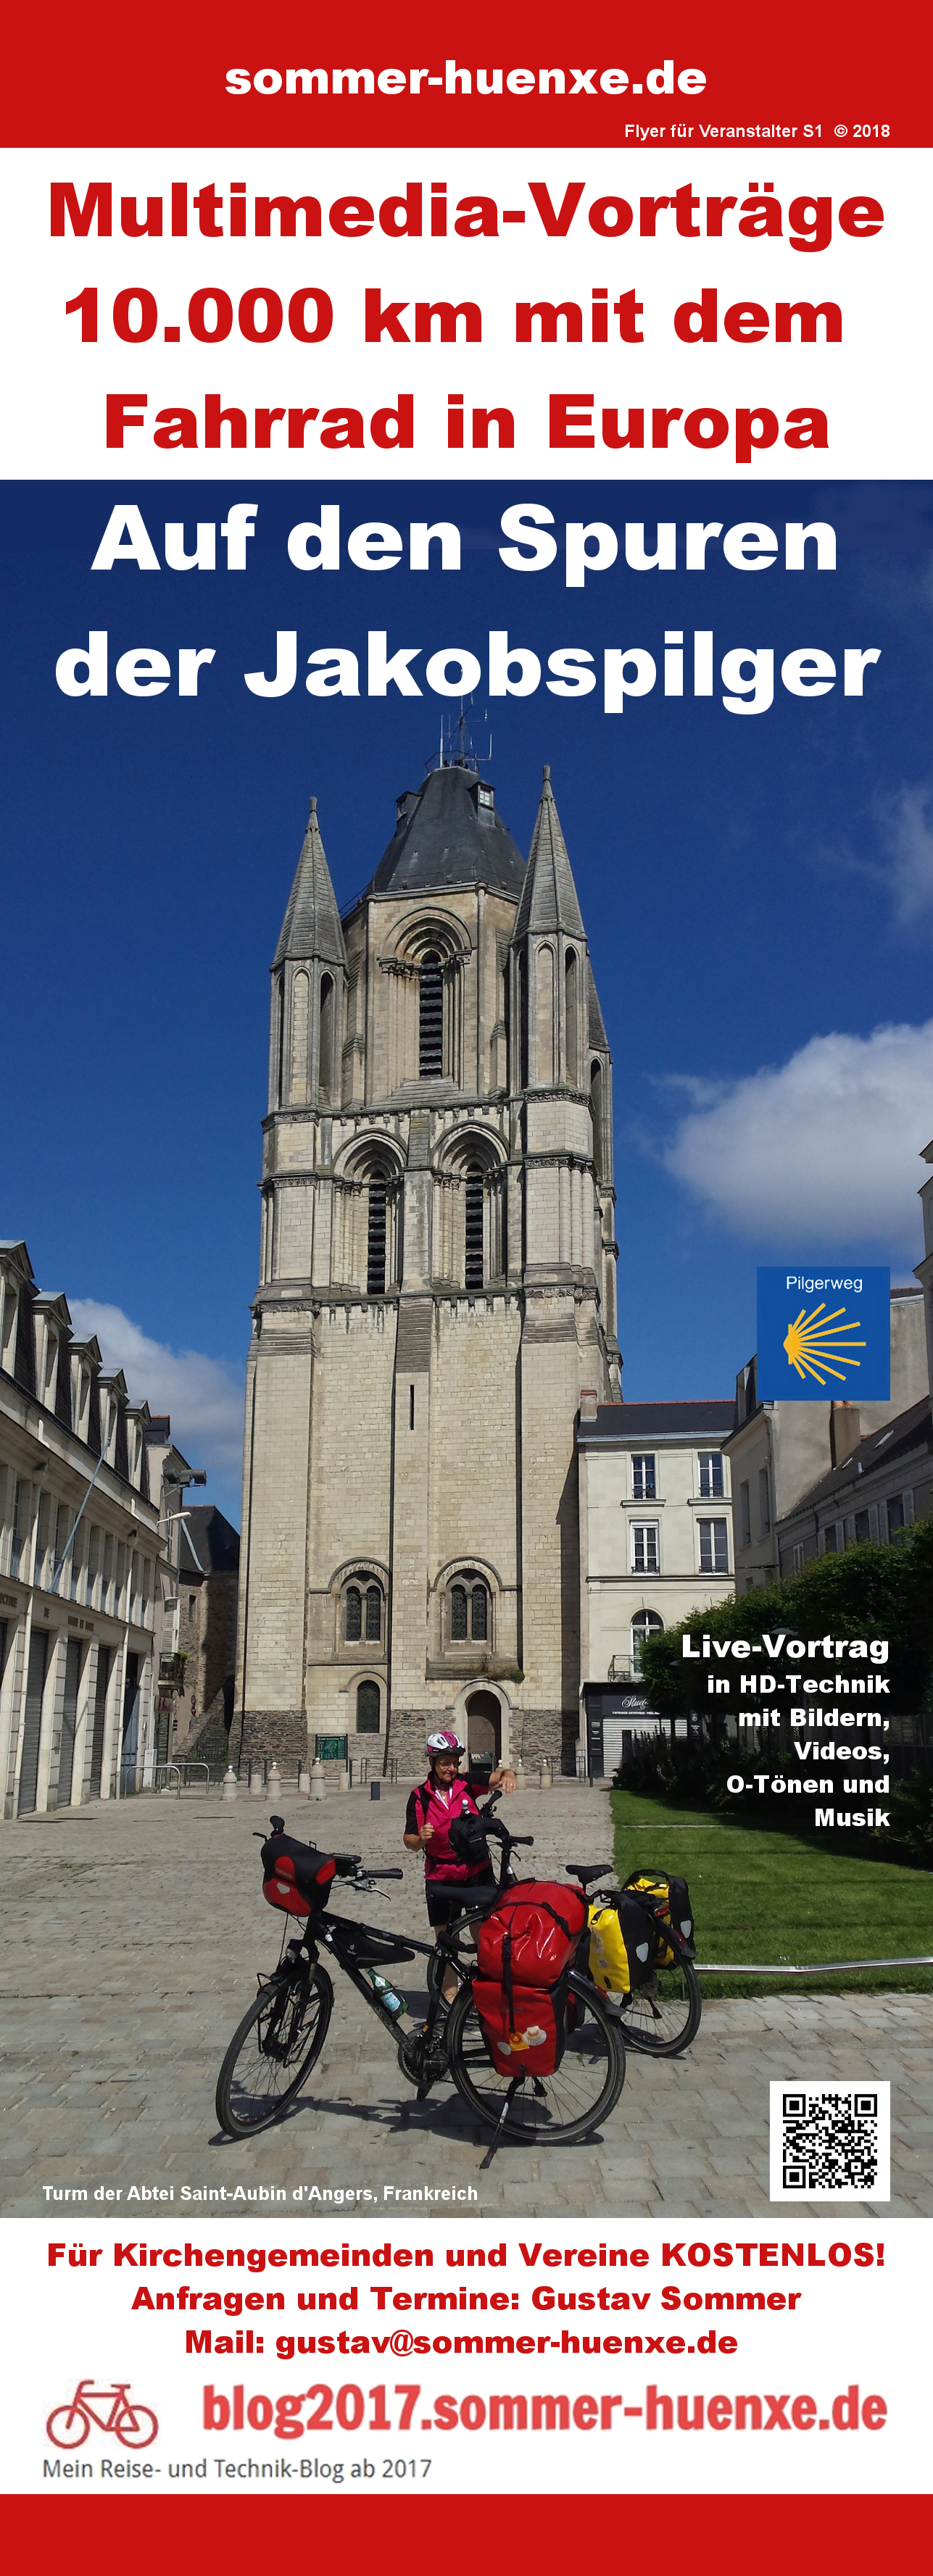 Turm der Abtei Saint-Aubin d'Angers, Frankreich